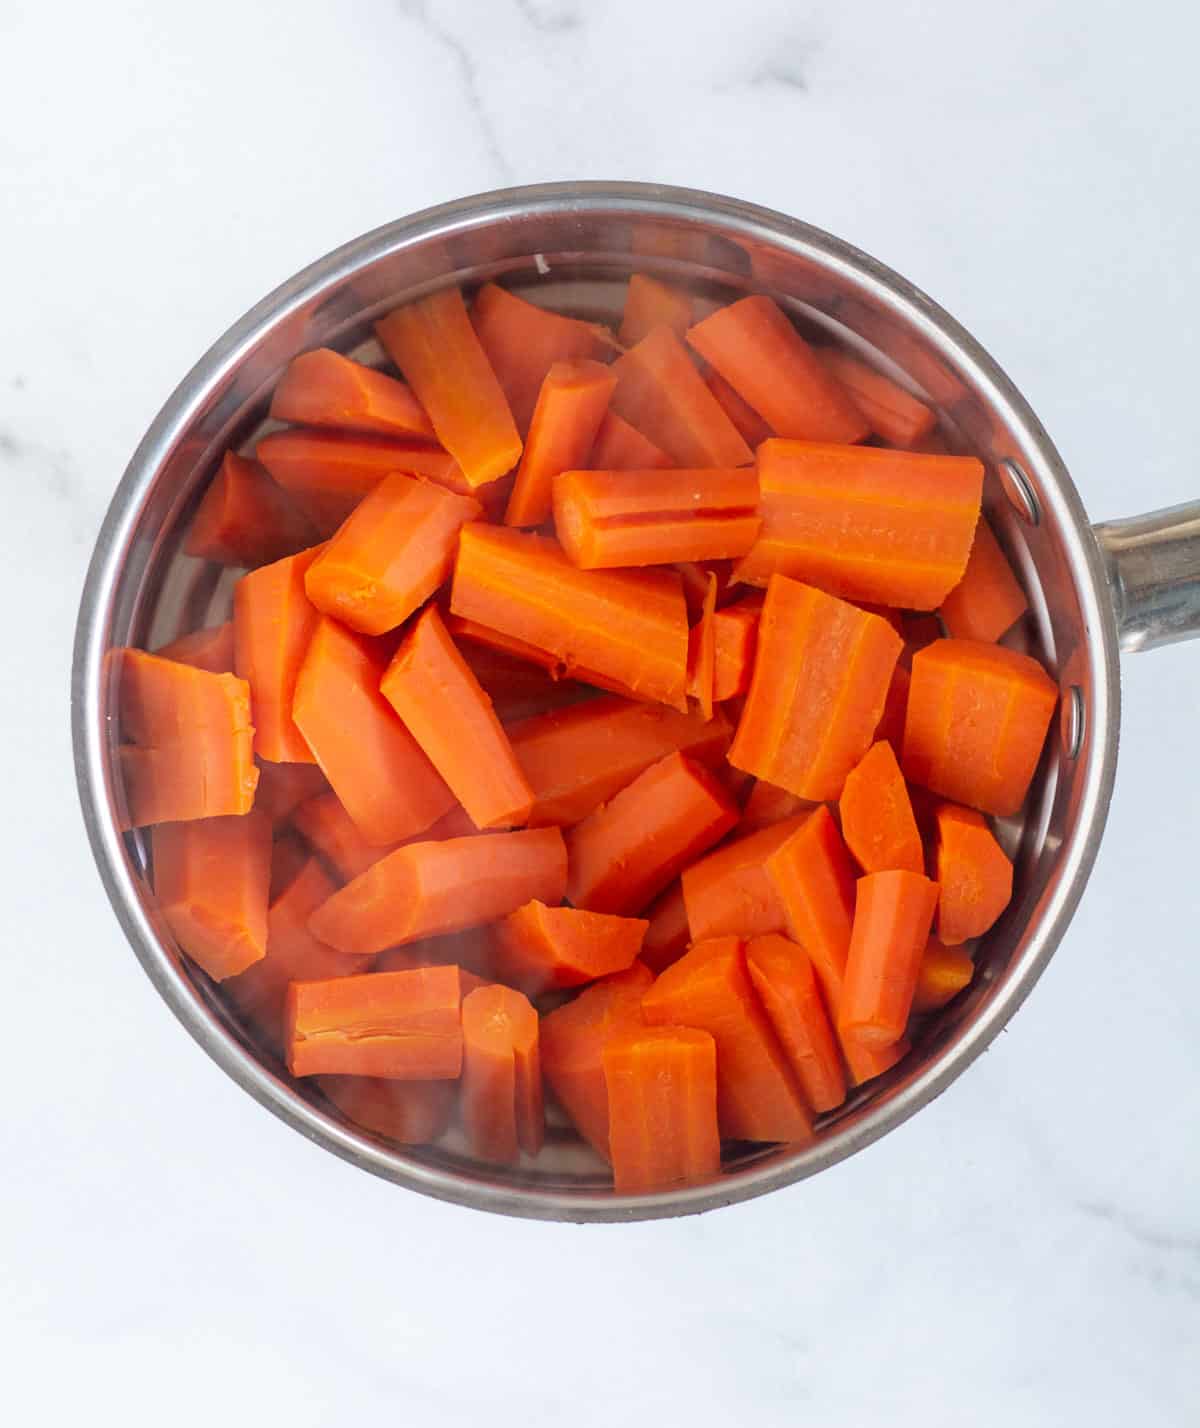 steamed carrots in steamer basket